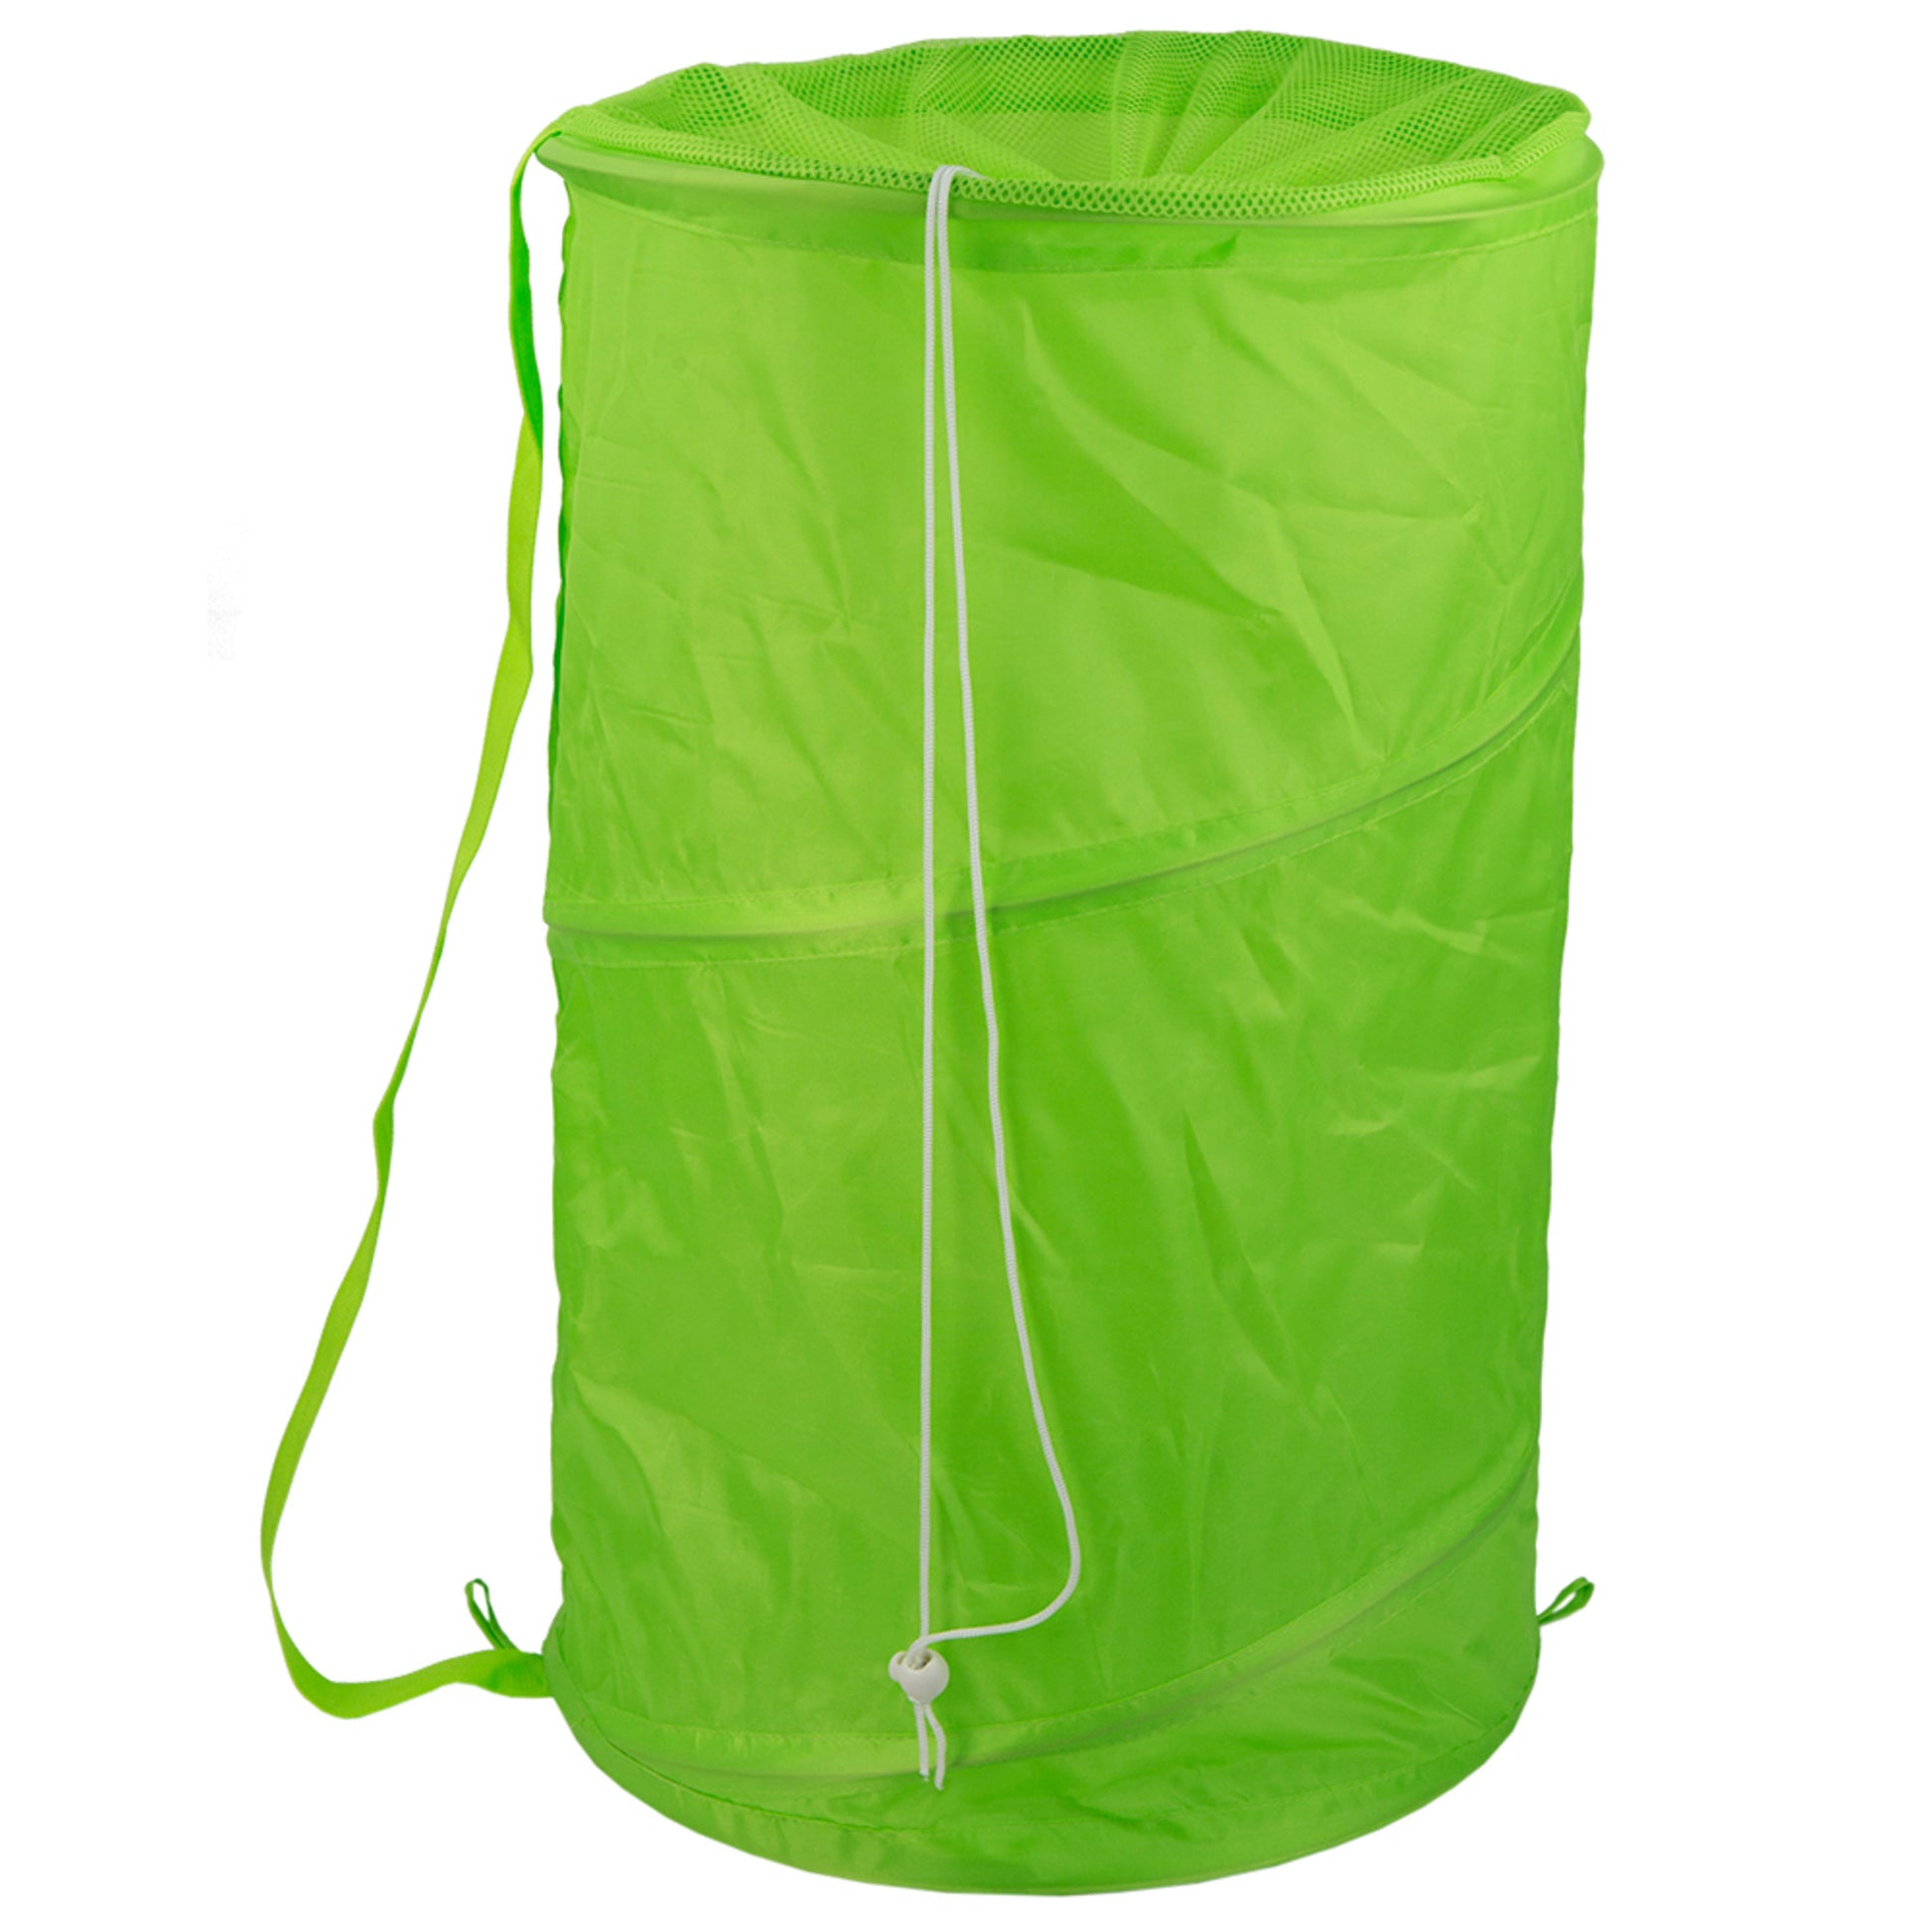 Home Basics Mesh Barrel Laundry Hamper, Green - Green